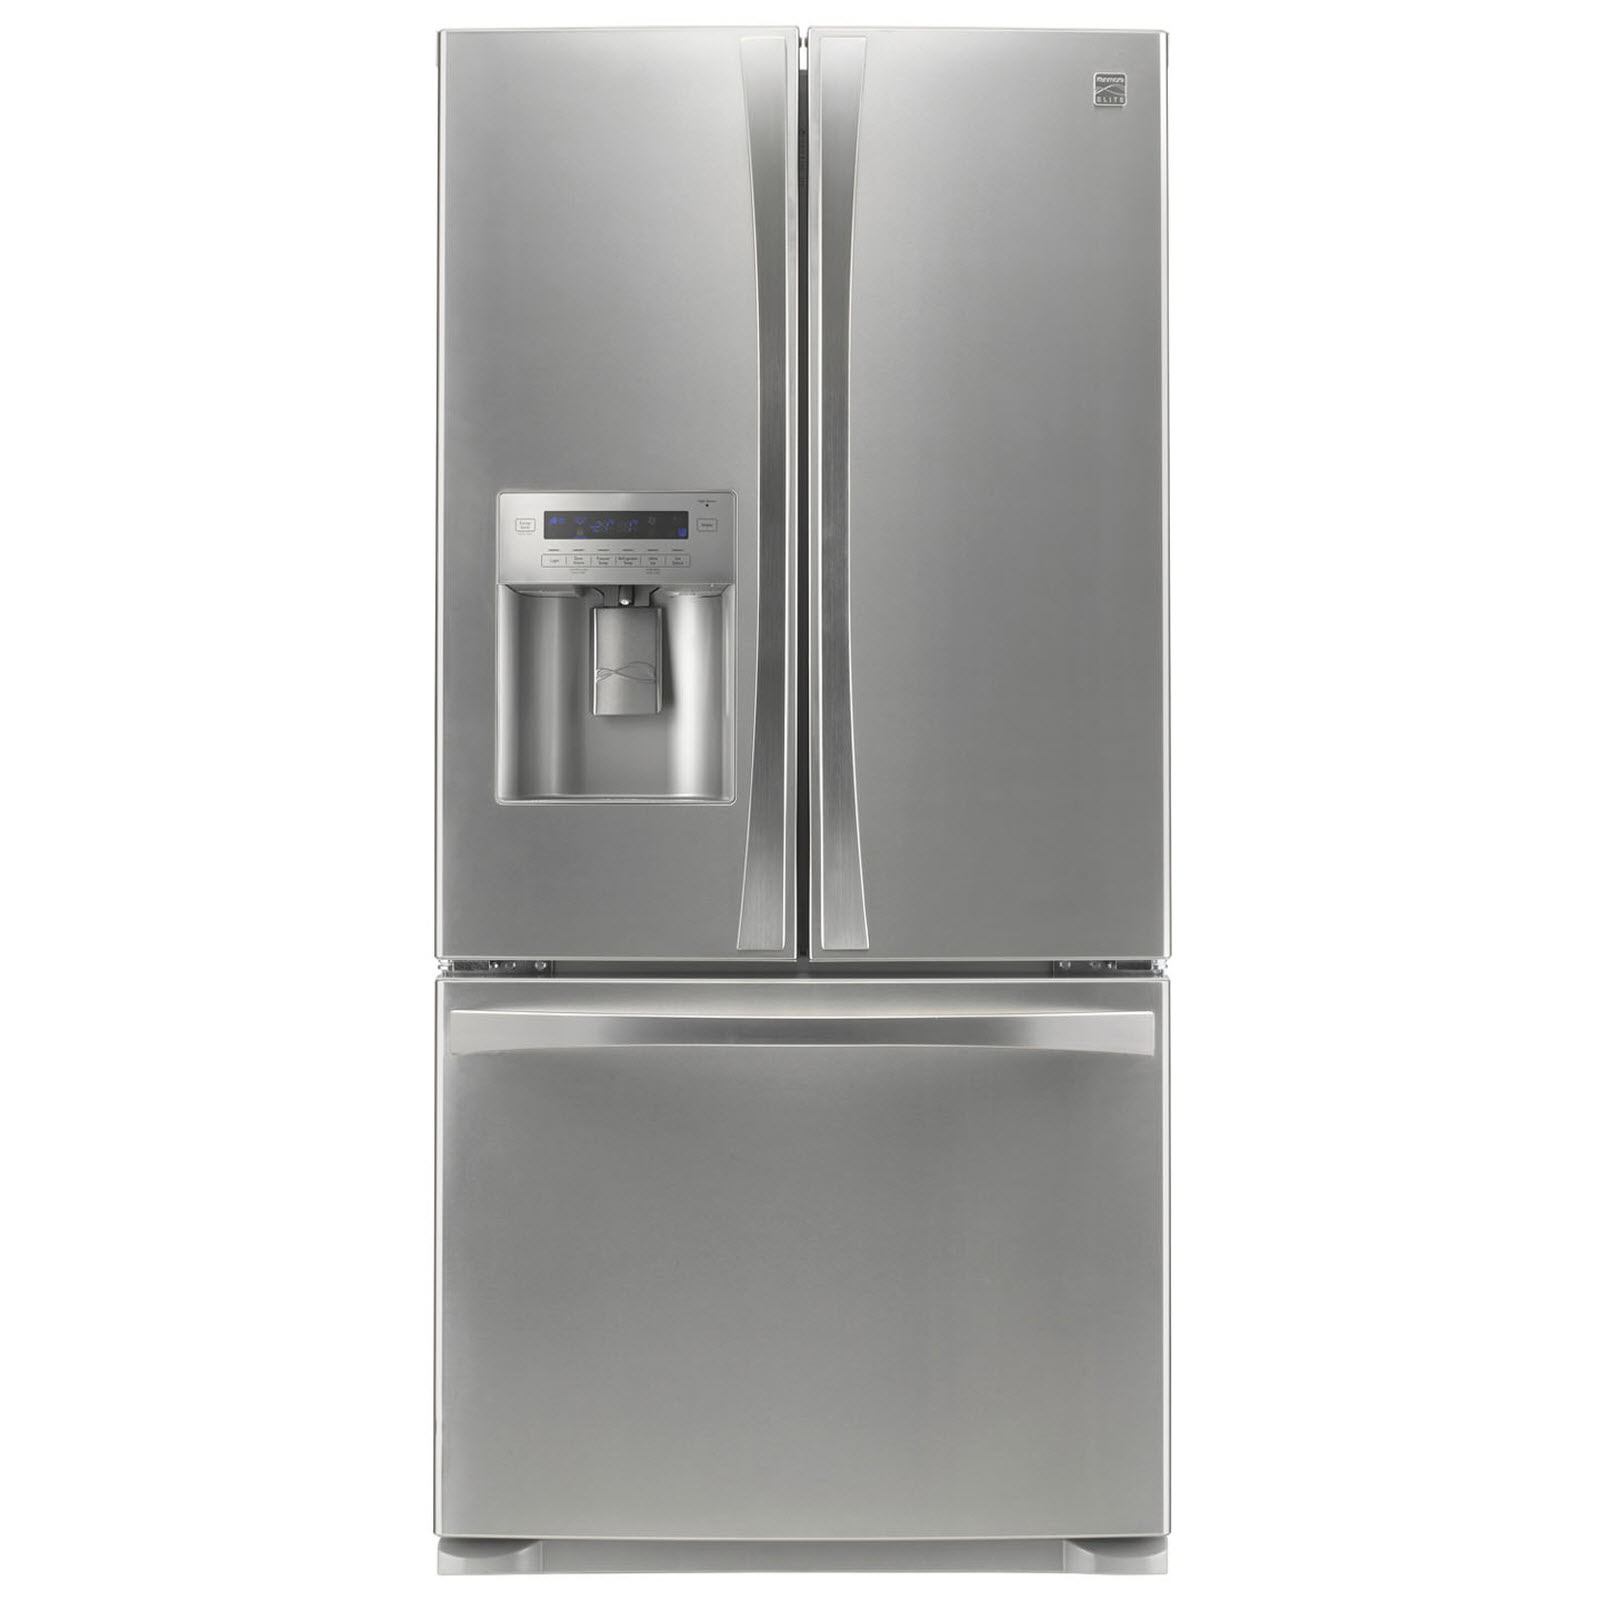 Kenmore Elite 71033 25.0 cu. ft. French-Door Bottom-Freezer Kenmore Elite Stainless Steel Refrigerator